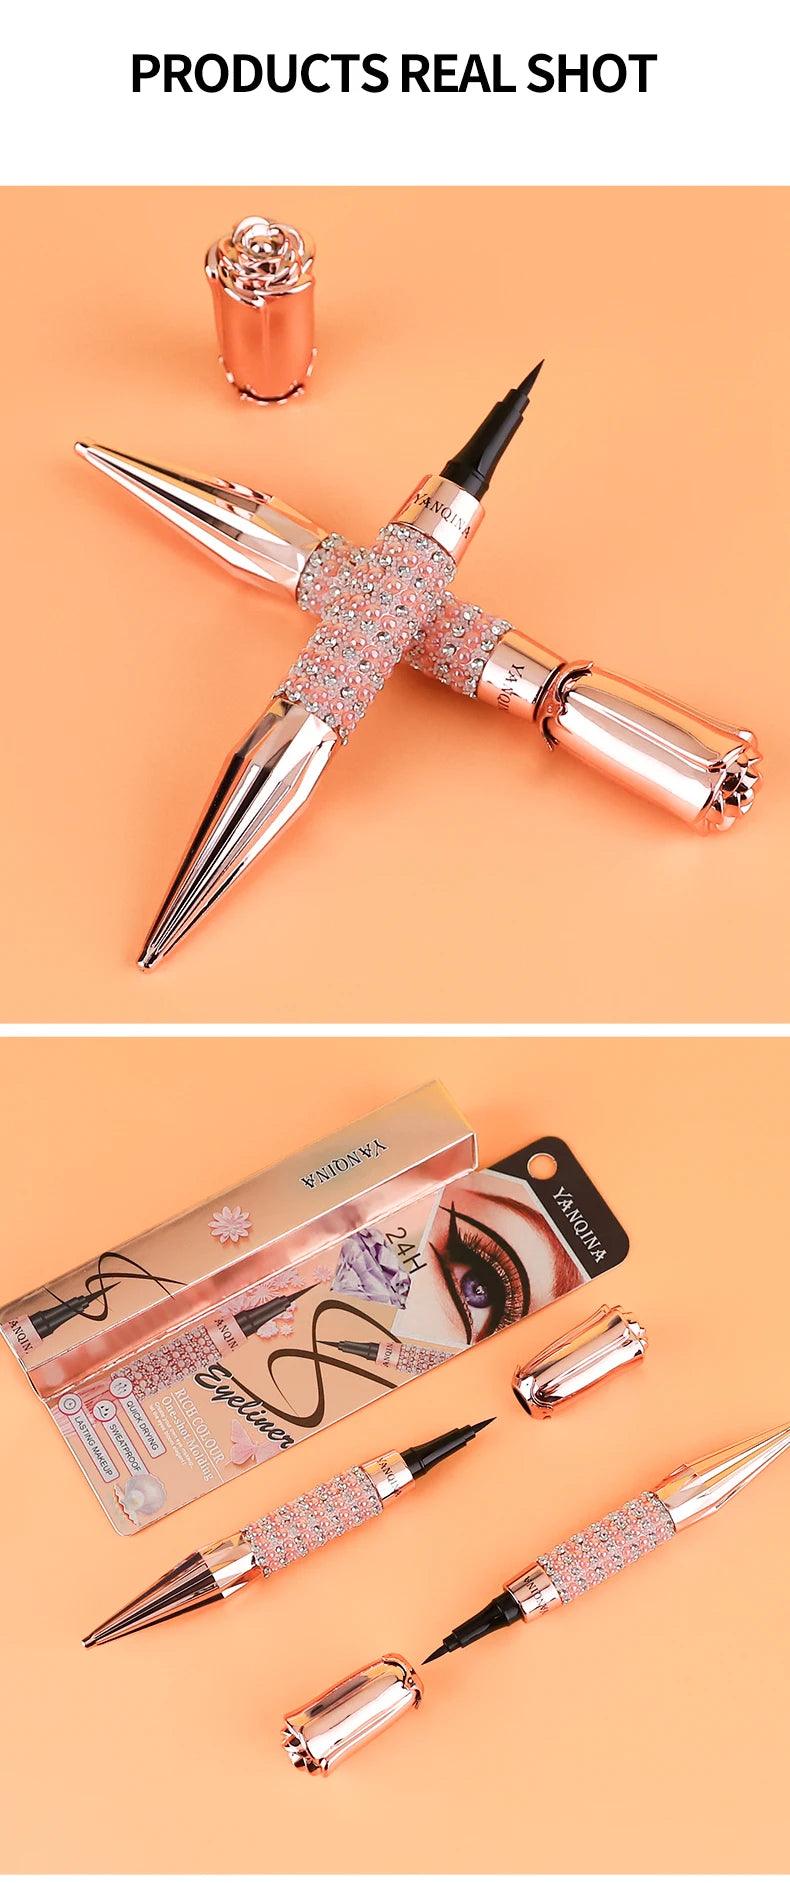 Waterproof Liquid Eyeliner Pen: Quick-dry, long-lasting.